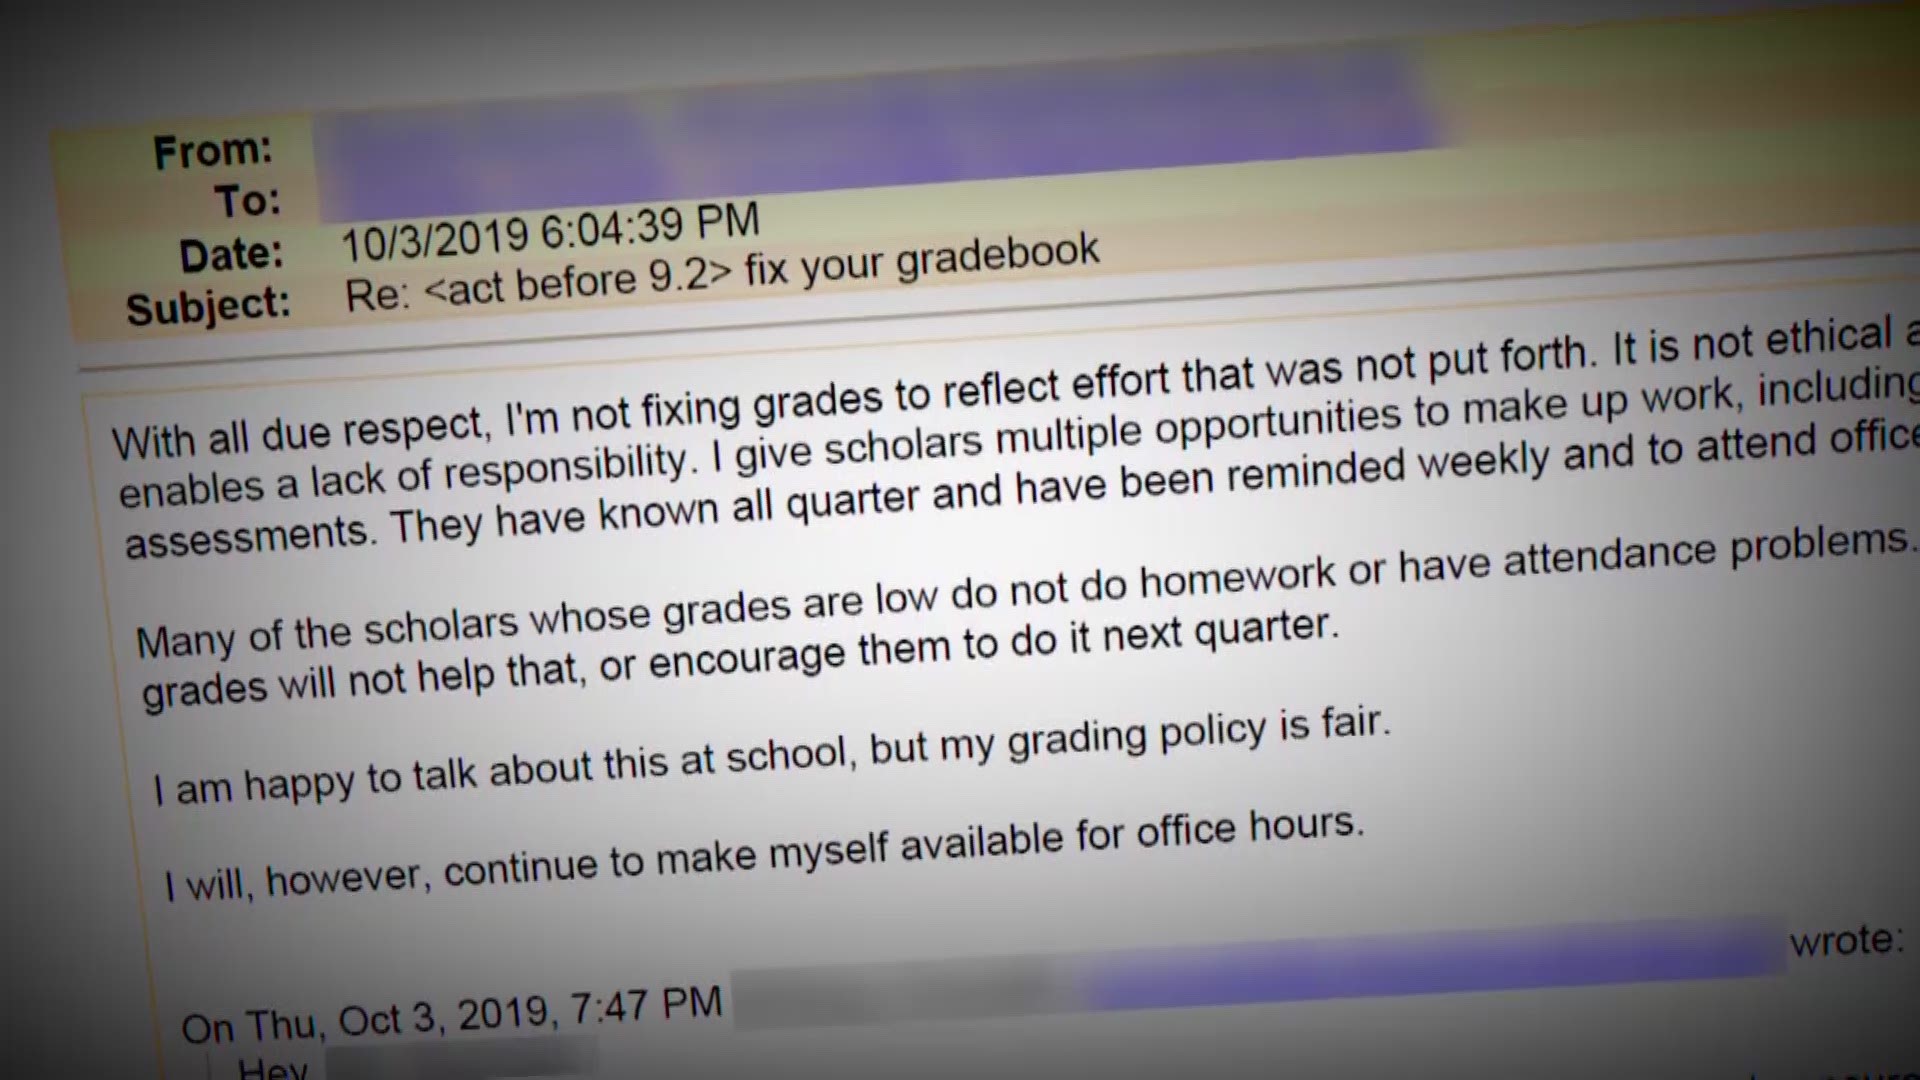 Fix Your Gradebook Emails Direct Teachers To Raise Averages Wwltv Com